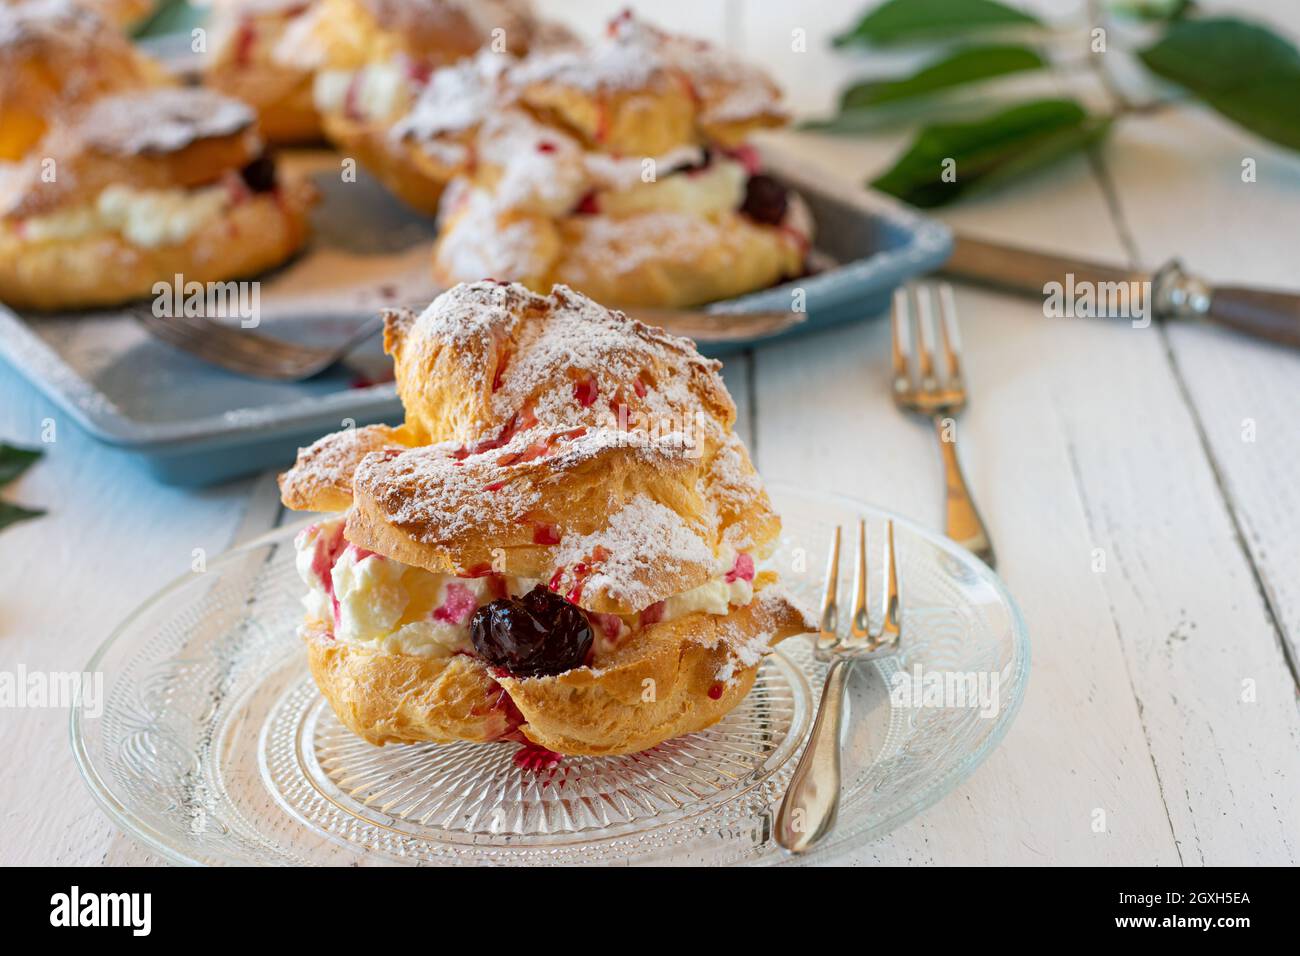 Homemade Cream puff pastry with whipped cream and cherries Stock Photo